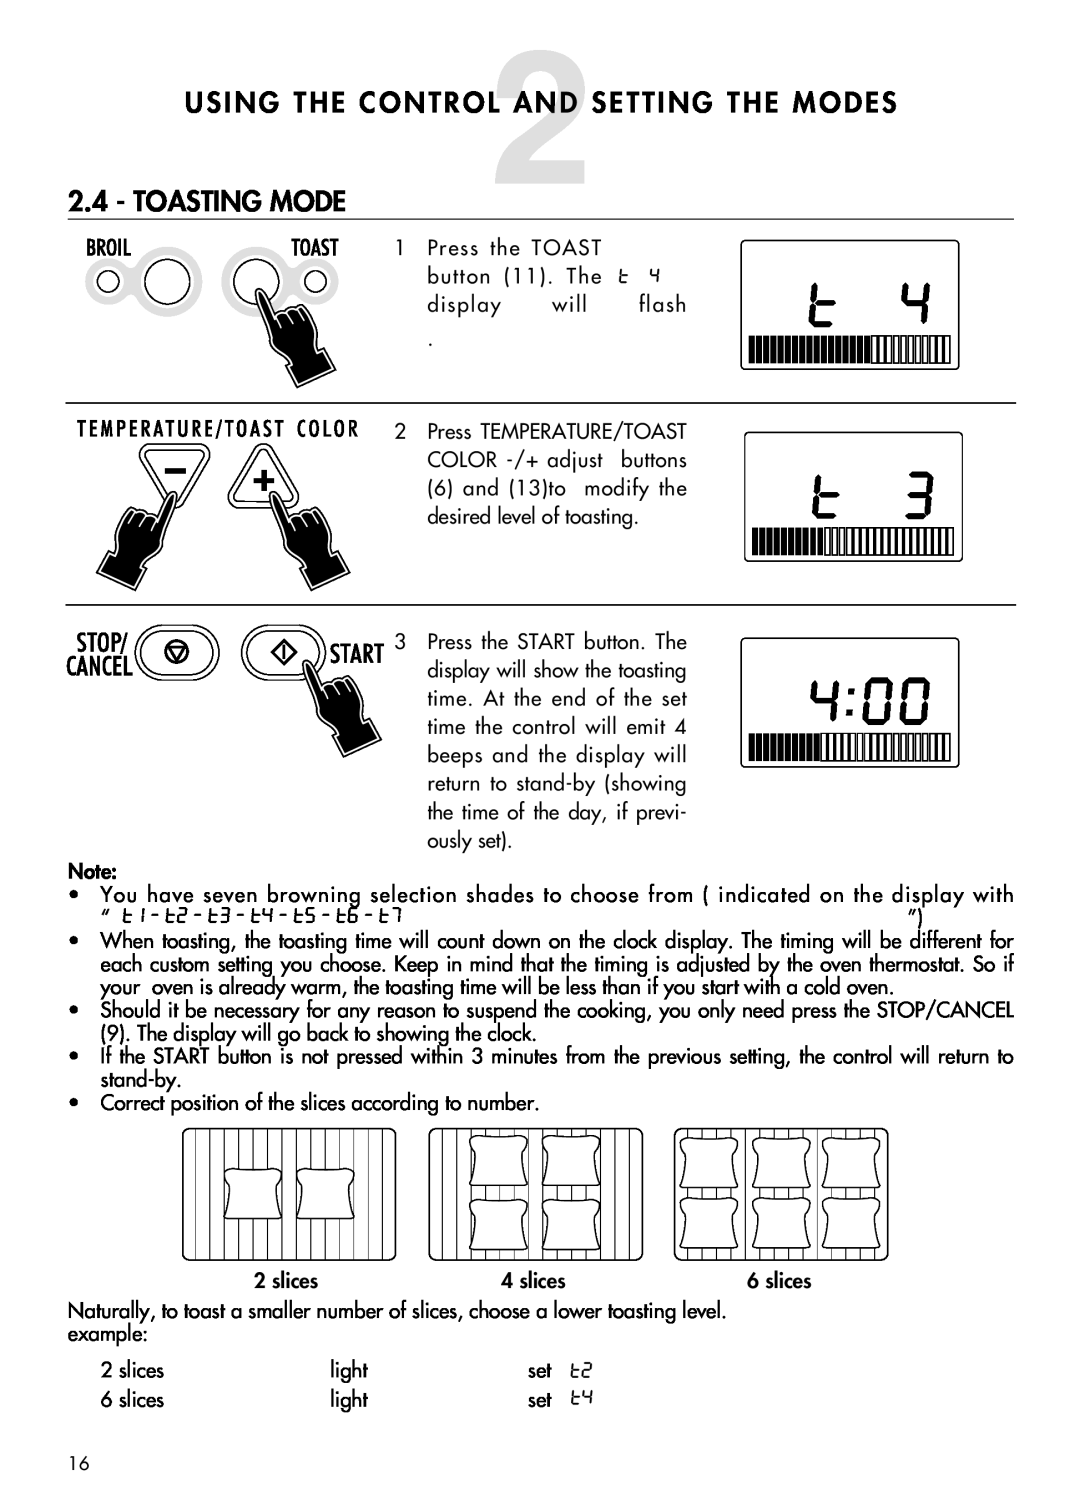 DeLonghi AD699 manual Toasting Mode 